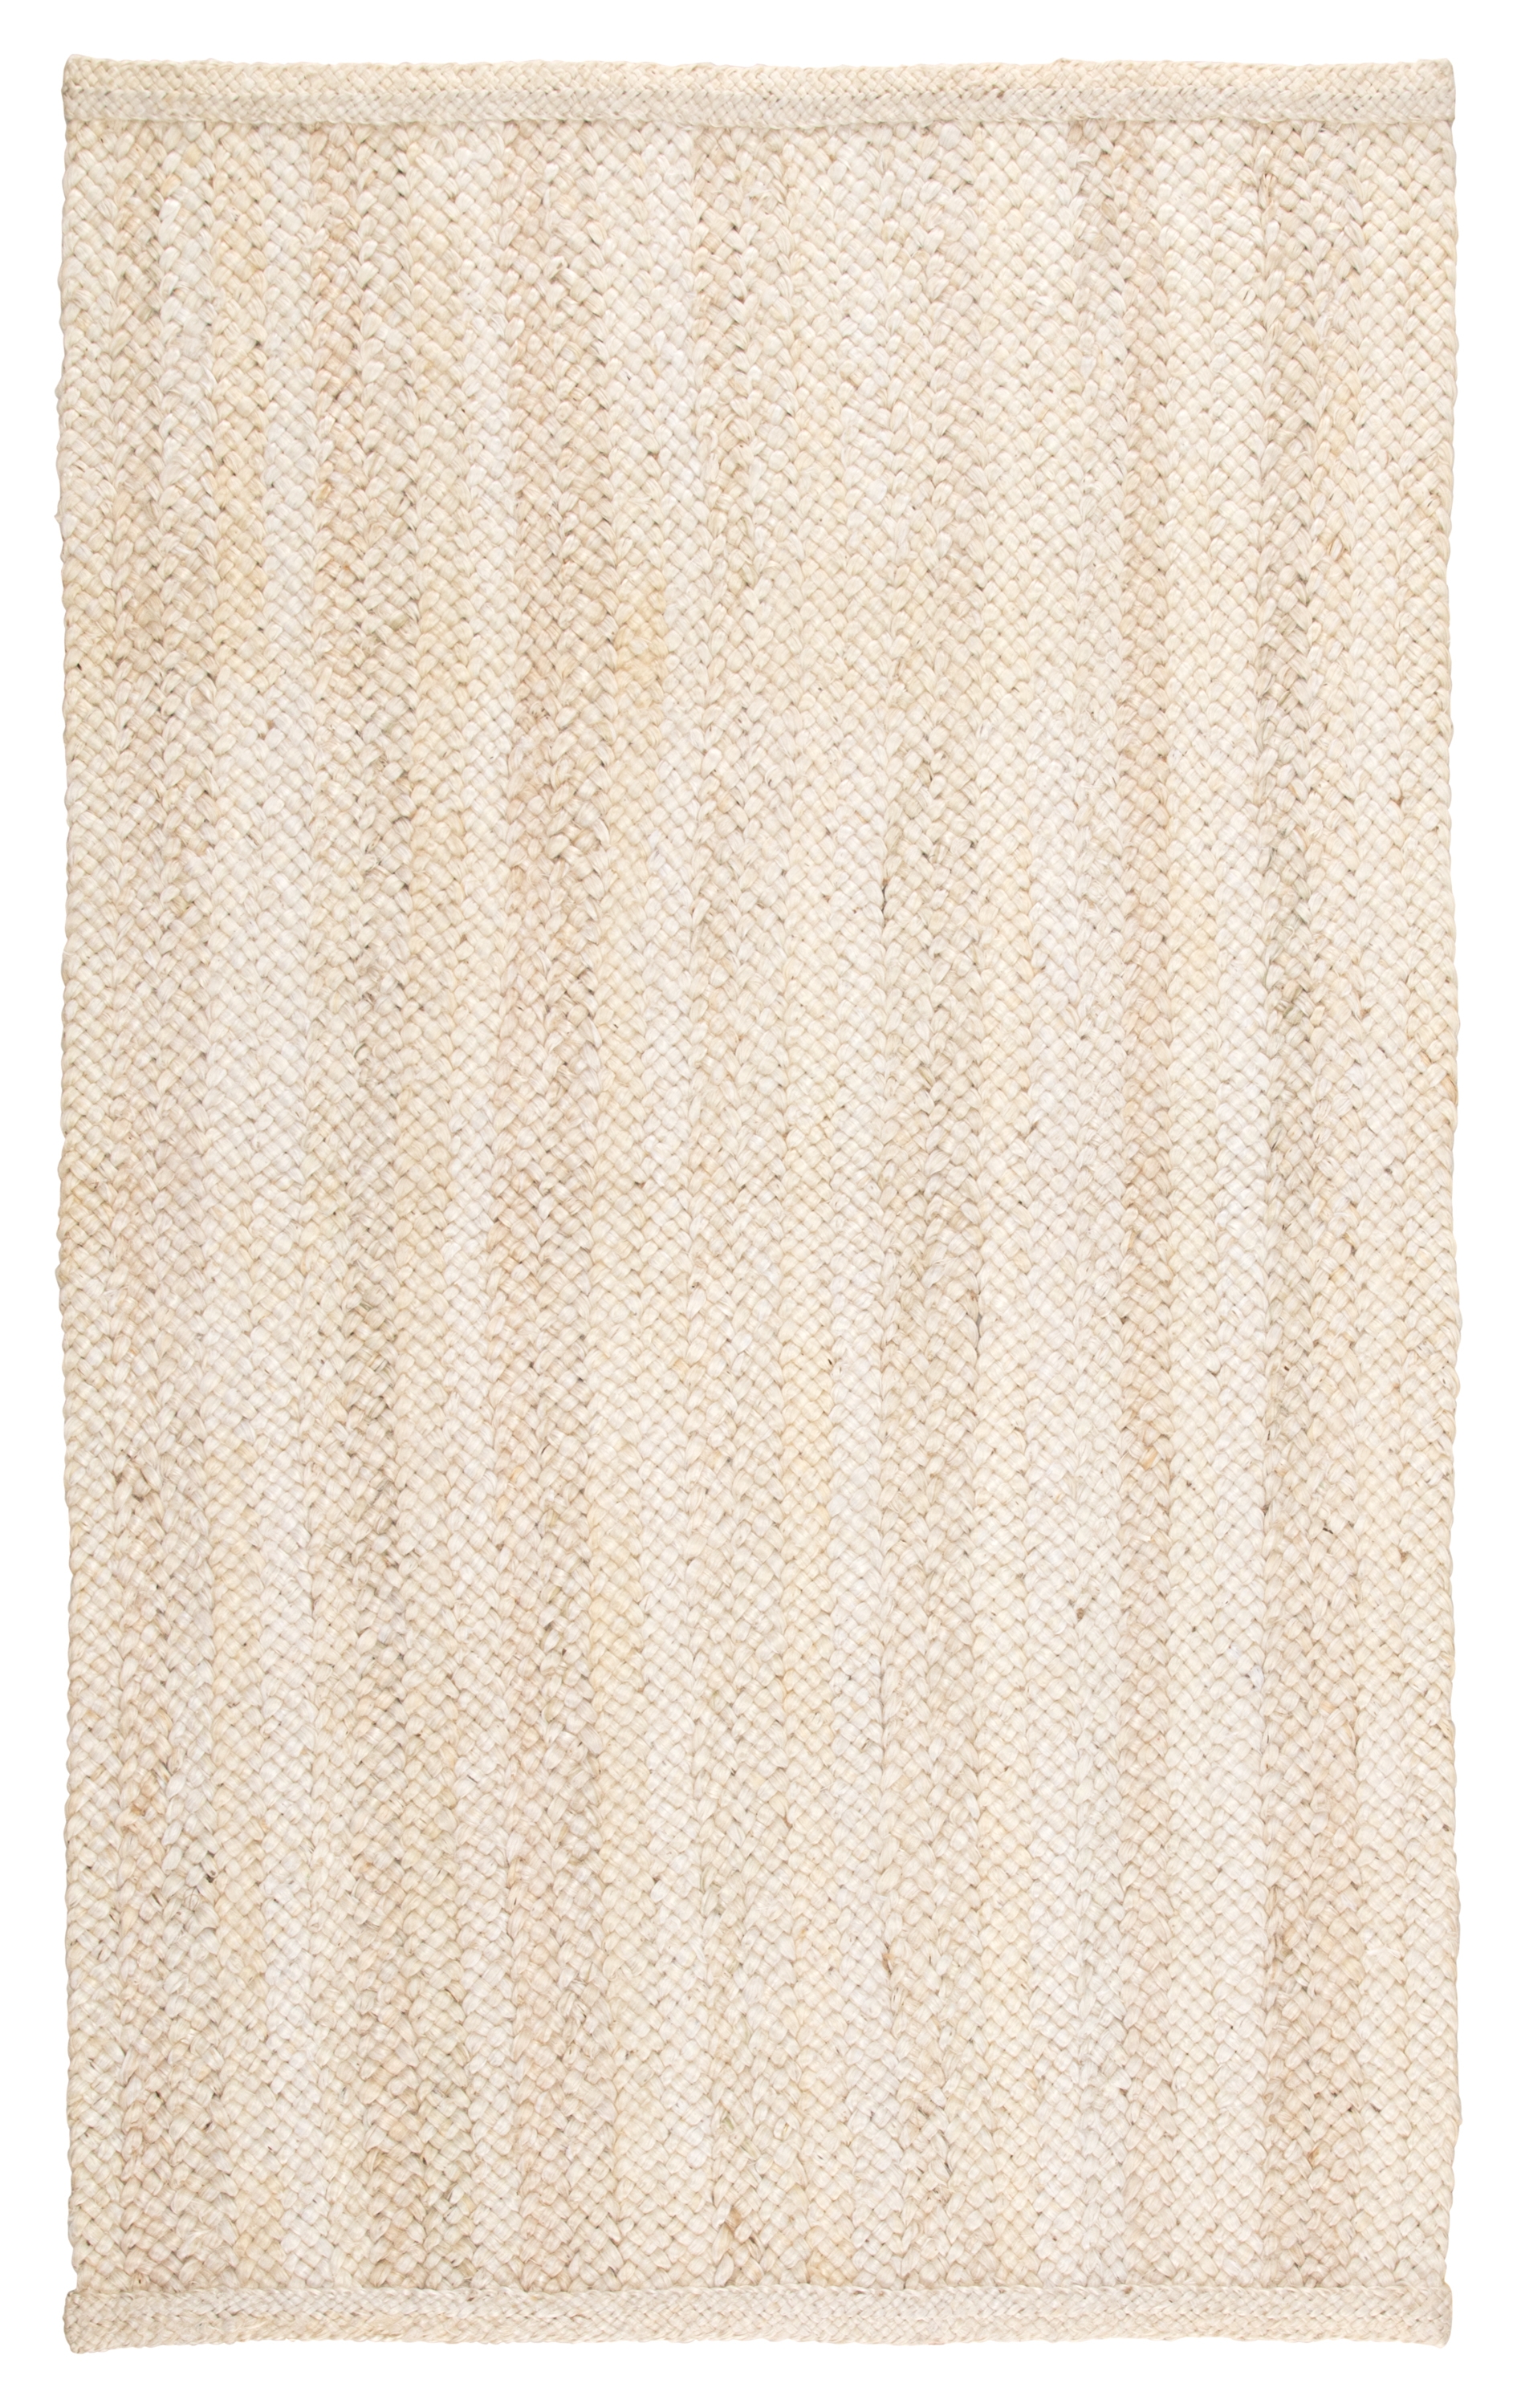 Anichini Natural Solid Ivory/ Beige Area Rug (10'X14') - Image 0